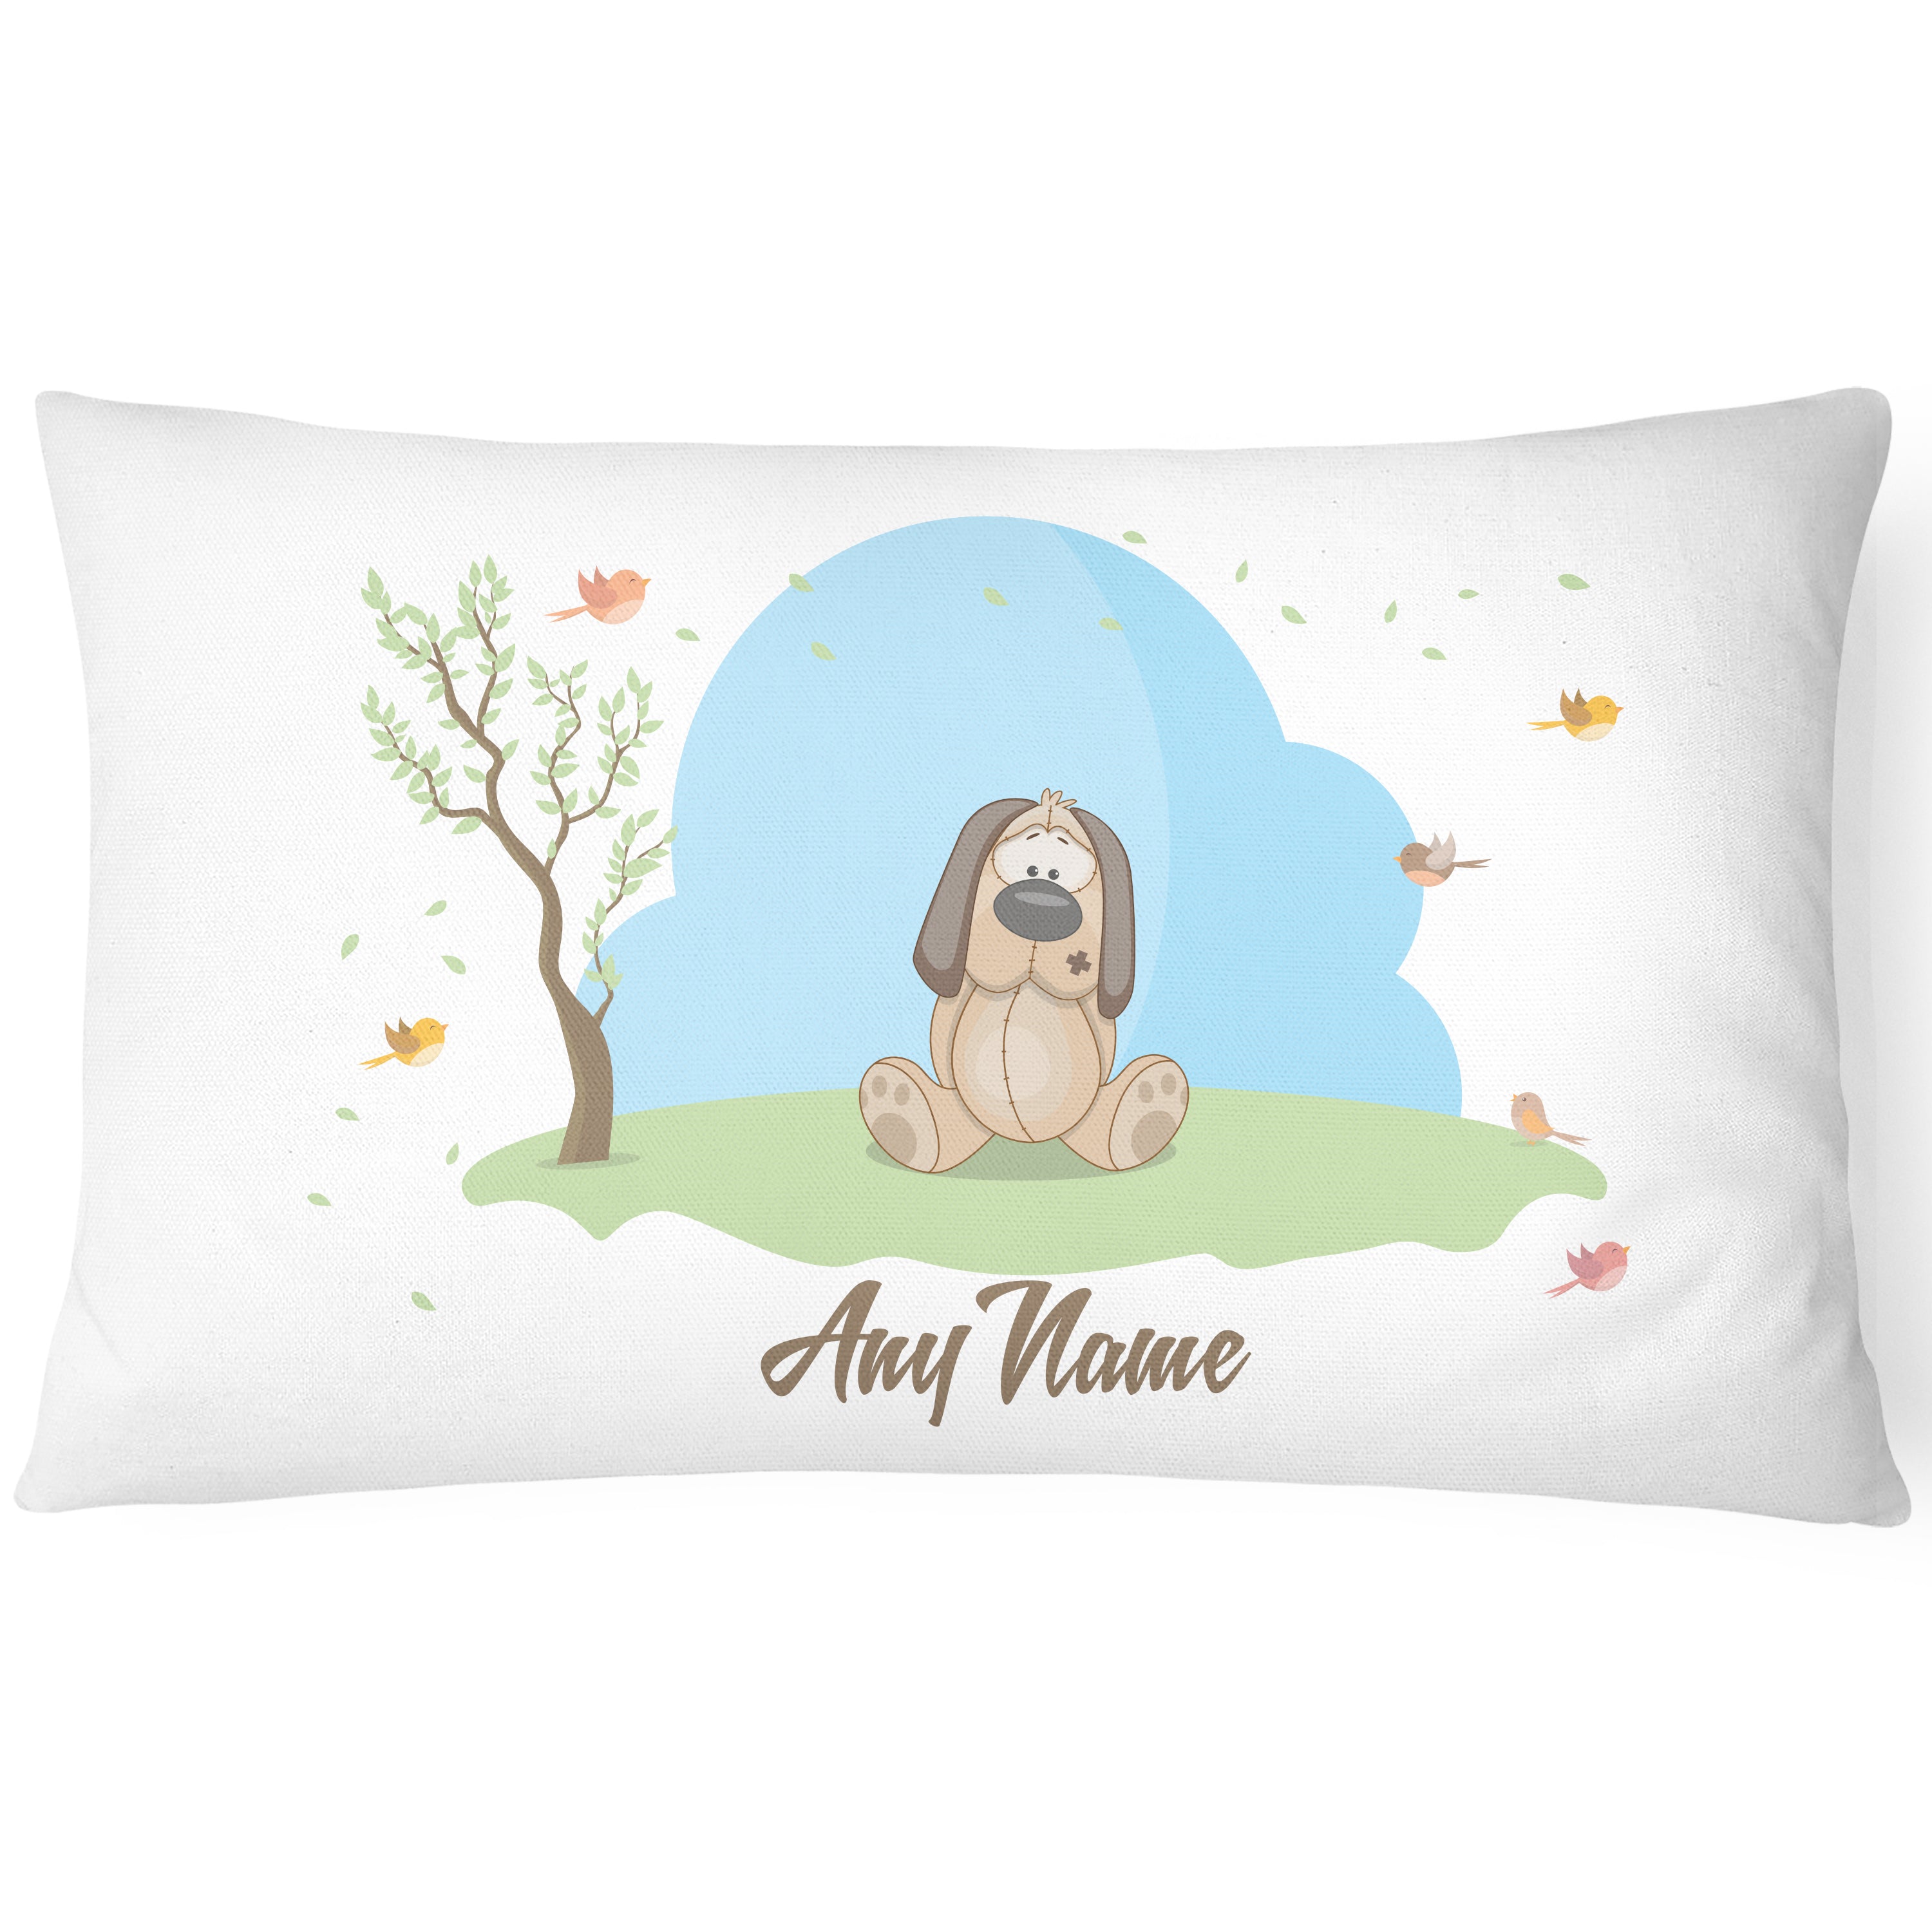 Personalised Children's Pillowcase Cute Animal -  Adorable